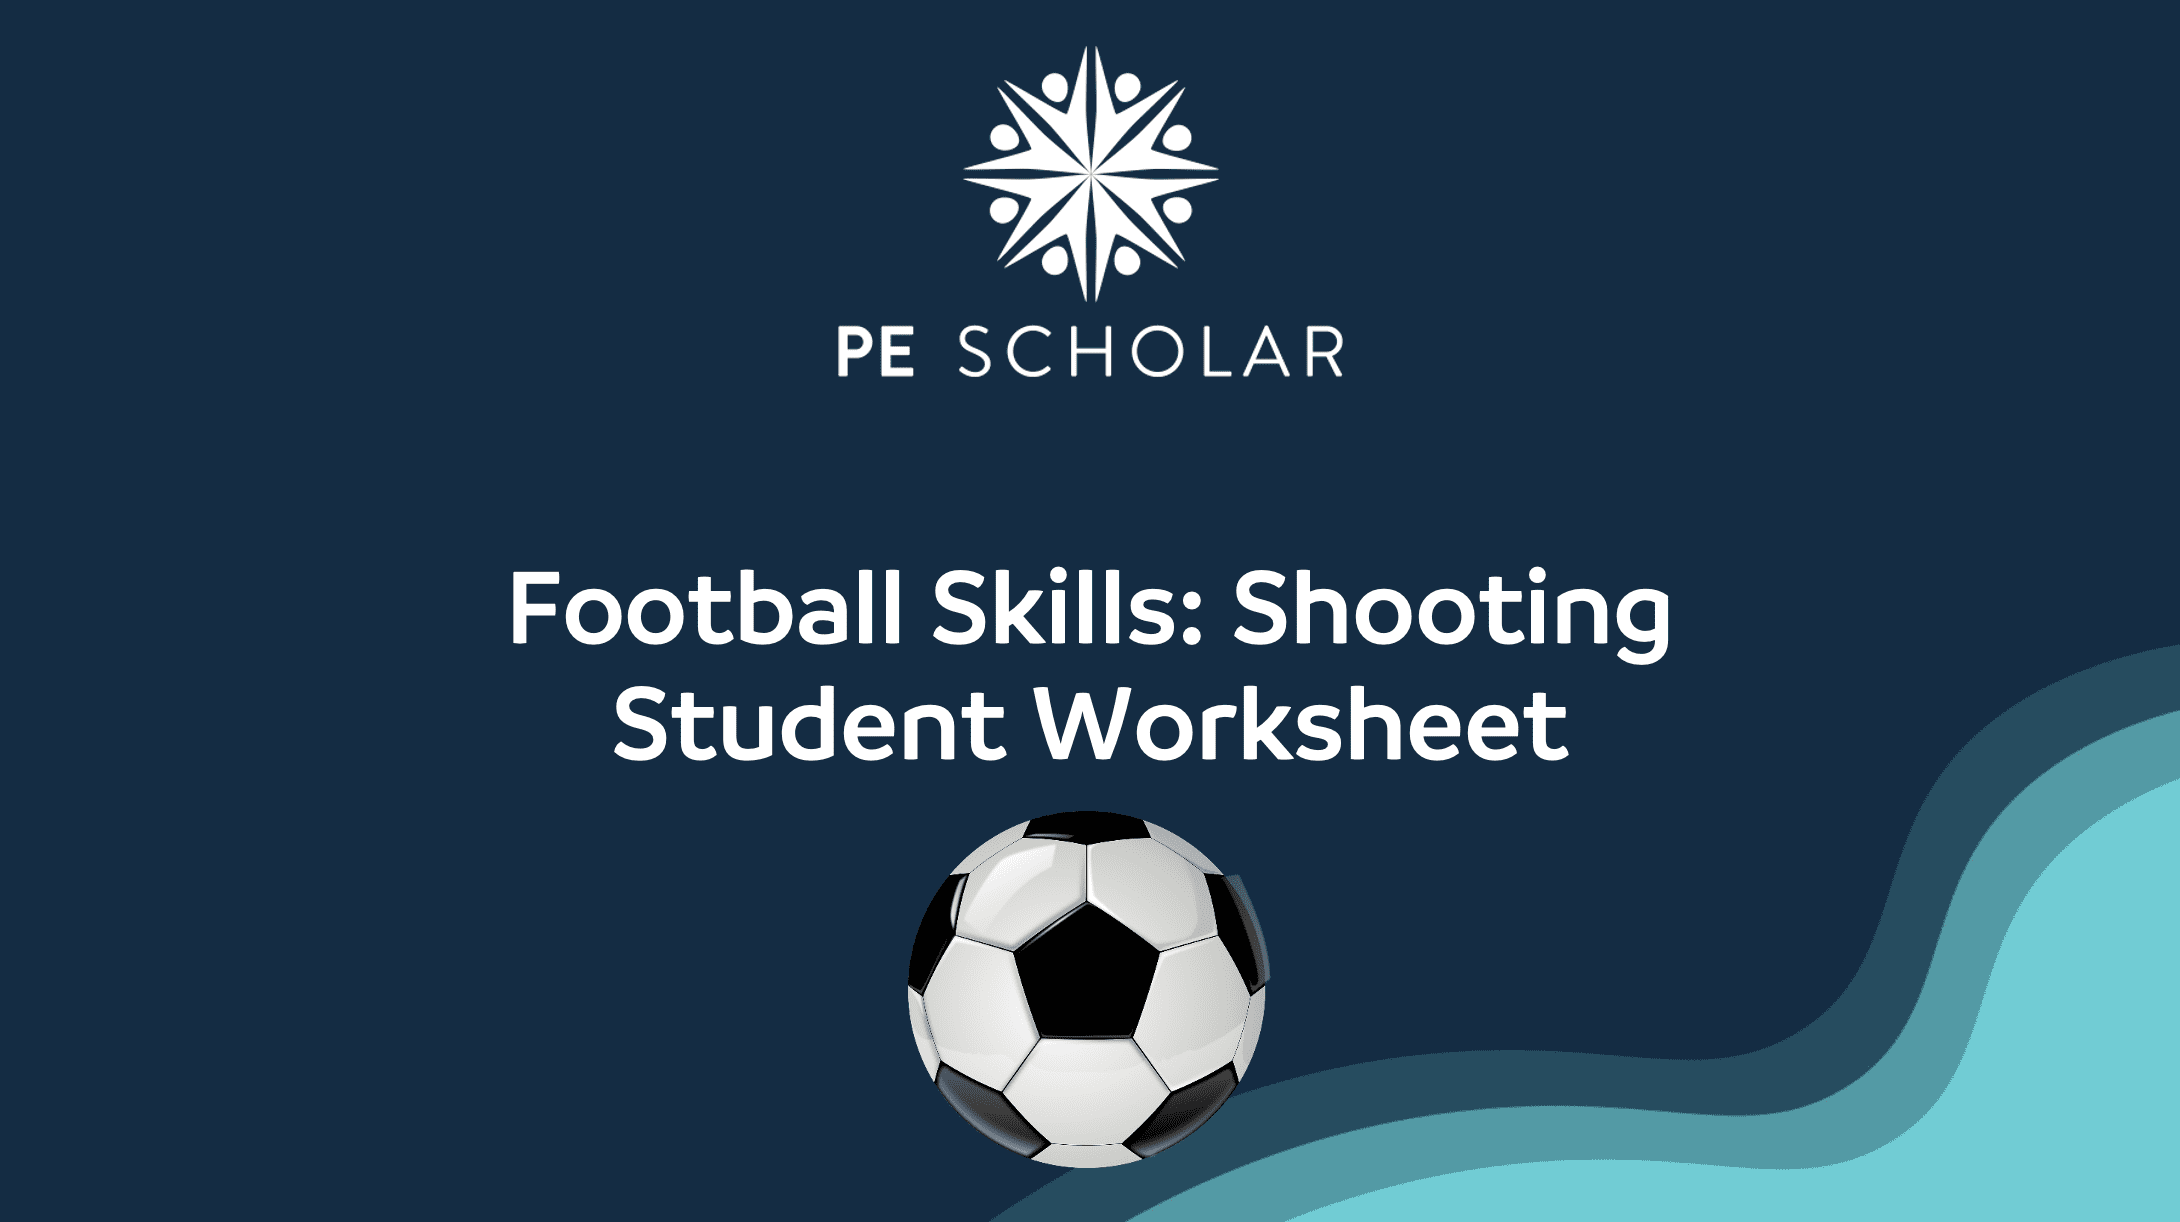 Football Skills: Shooting Student Worksheet